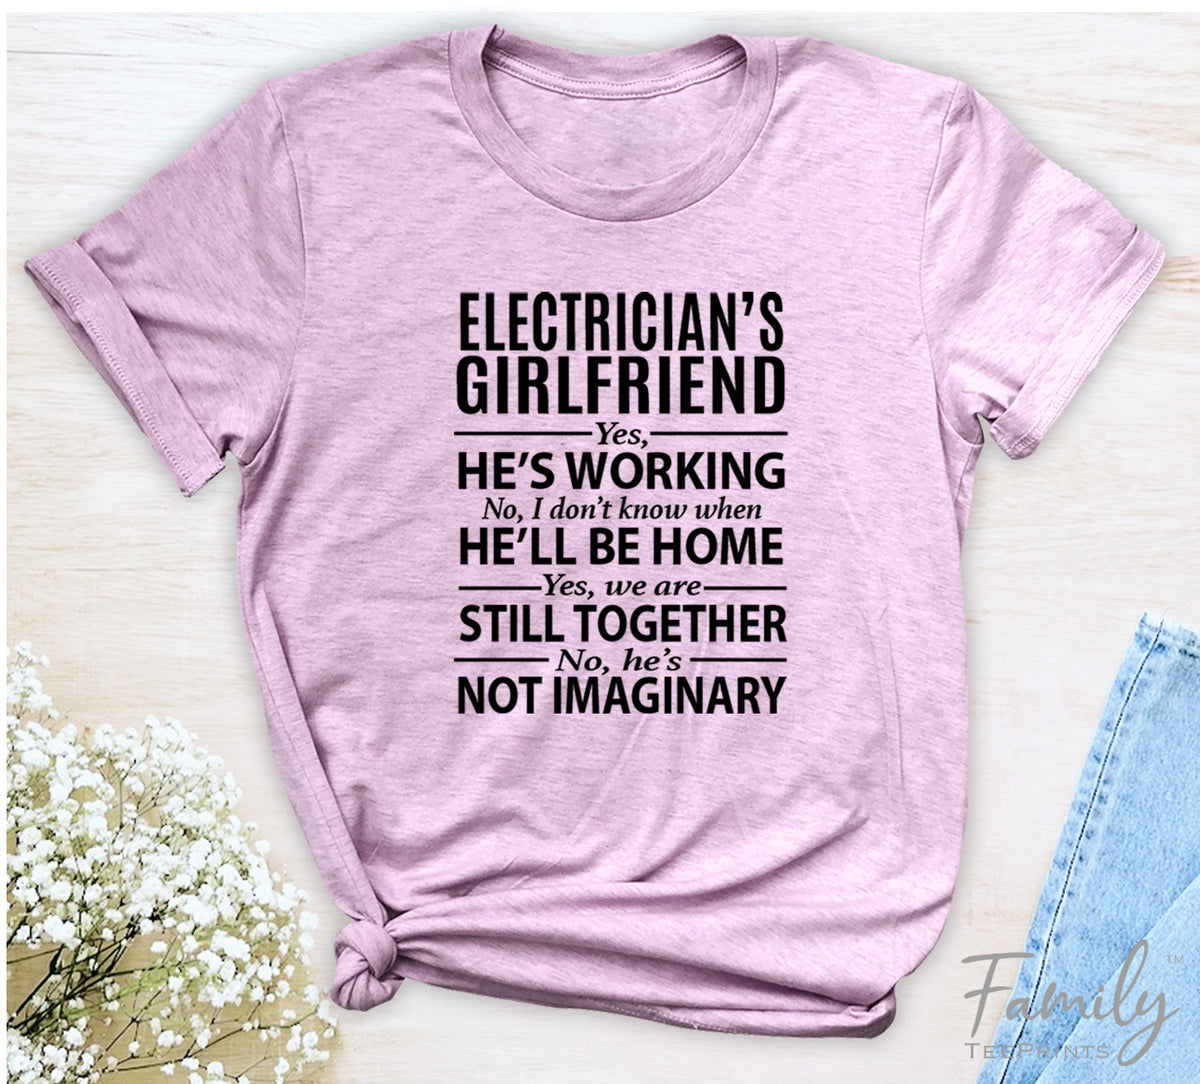 Electrician's Girlfriend Yes, He's Working...- Unisex T-shirt - Electrician's Girlfriend Shirt - familyteeprints